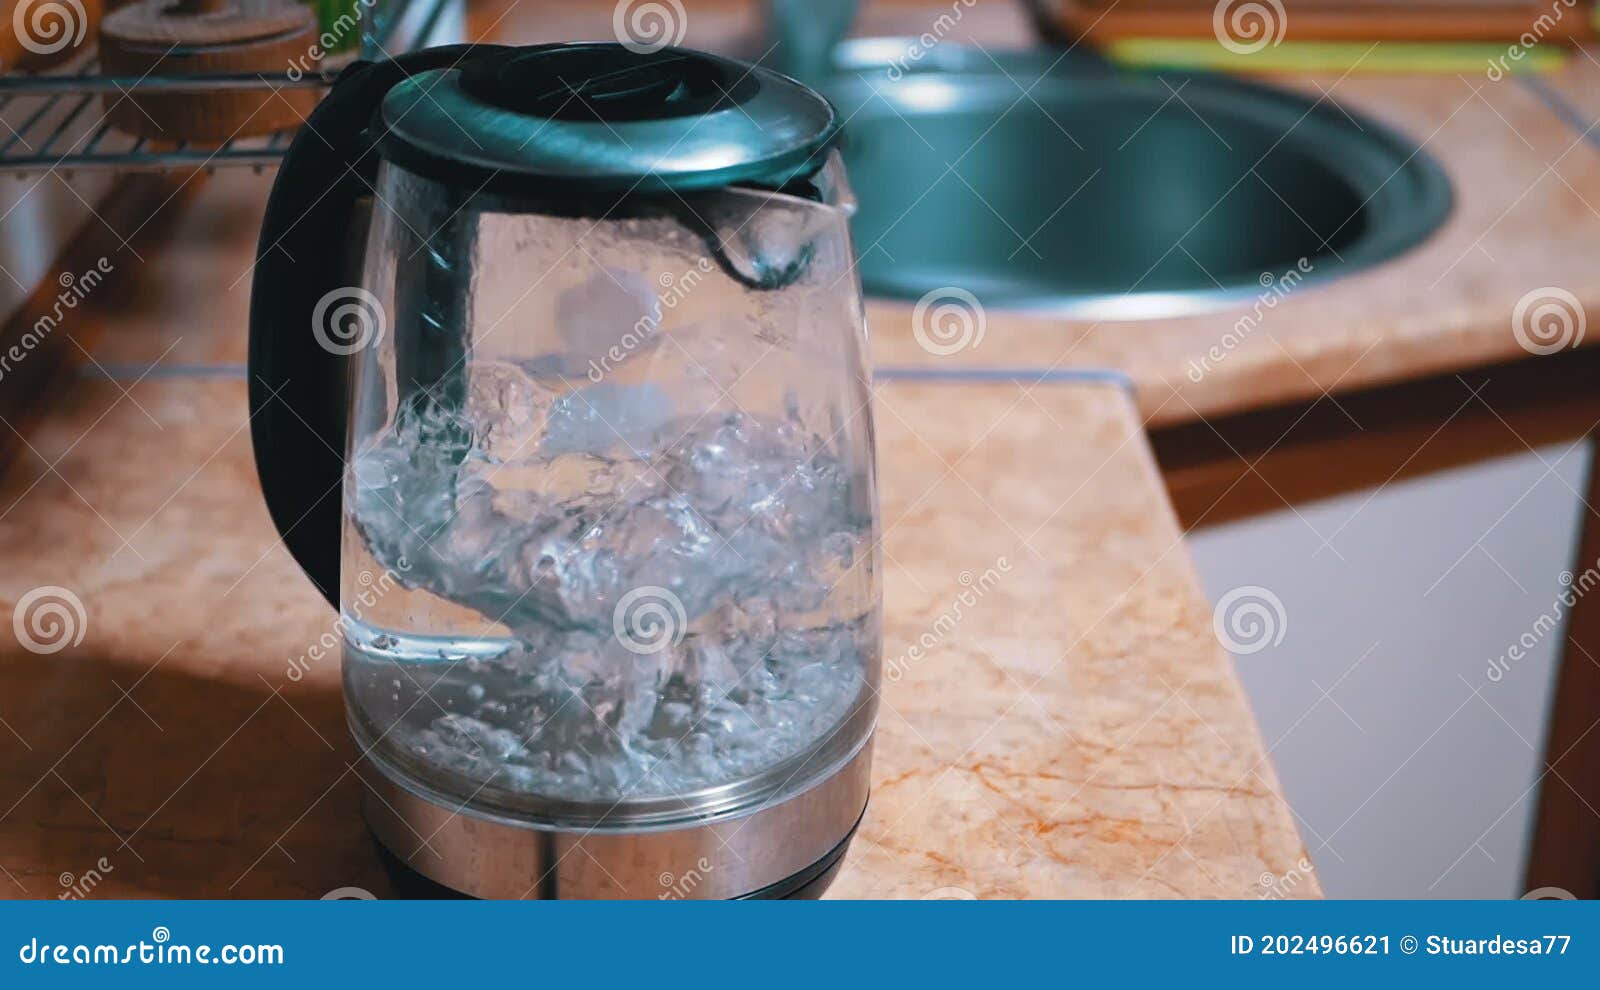 https://thumbs.dreamstime.com/z/bubbles-water-boiling-inside-glass-electric-kettle-backdrop-kitchen-air-bubbles-rising-slow-motion-water-water-boils-202496621.jpg